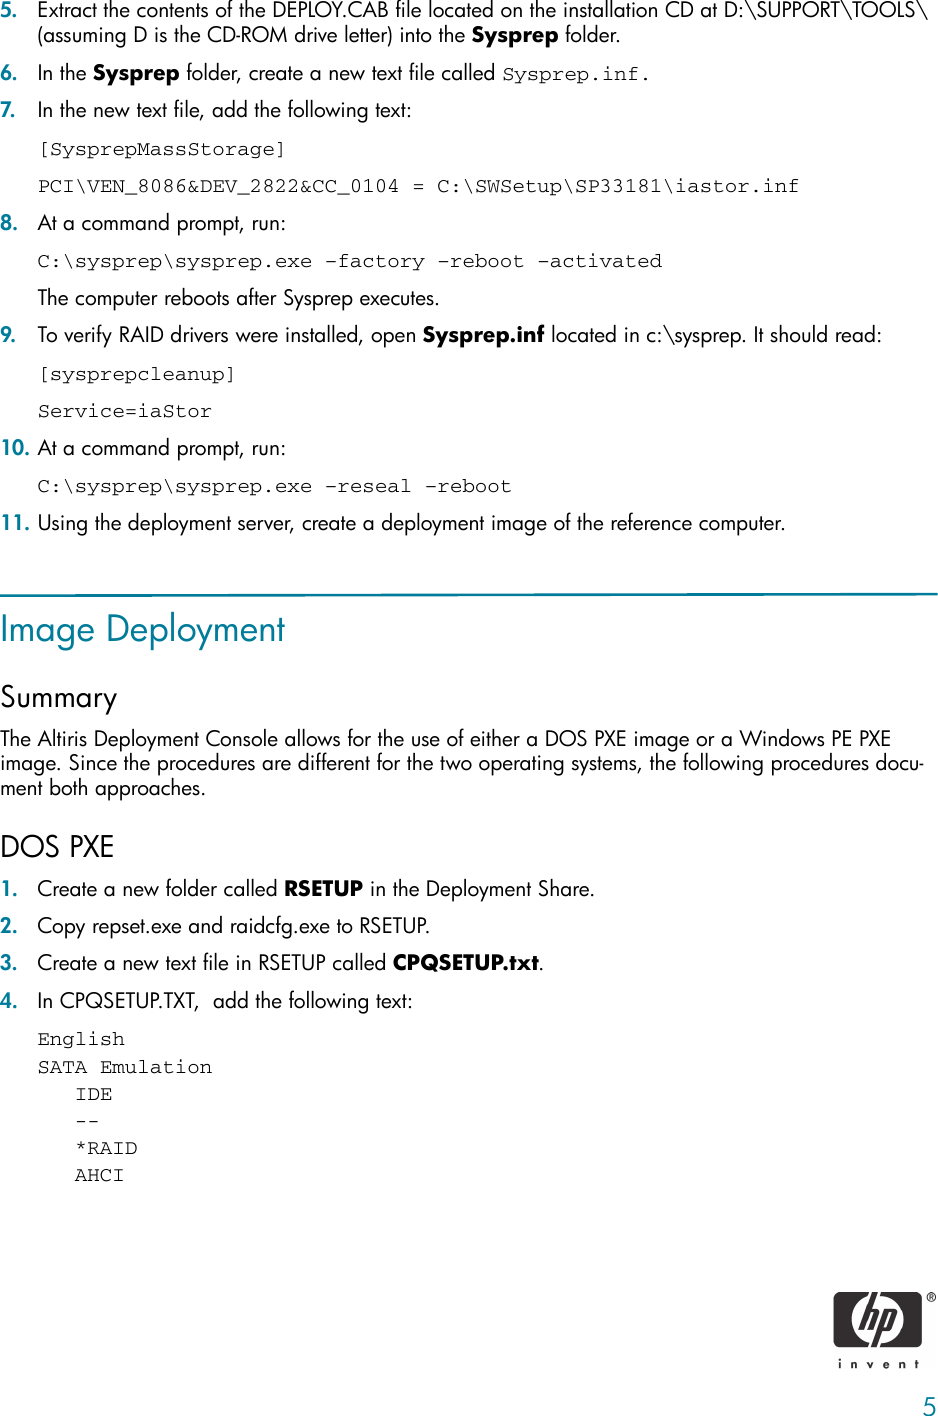 Page 5 of 7 - HP RAID Image Deployment On Compaq Dc7000 Series Business PCs C00767036